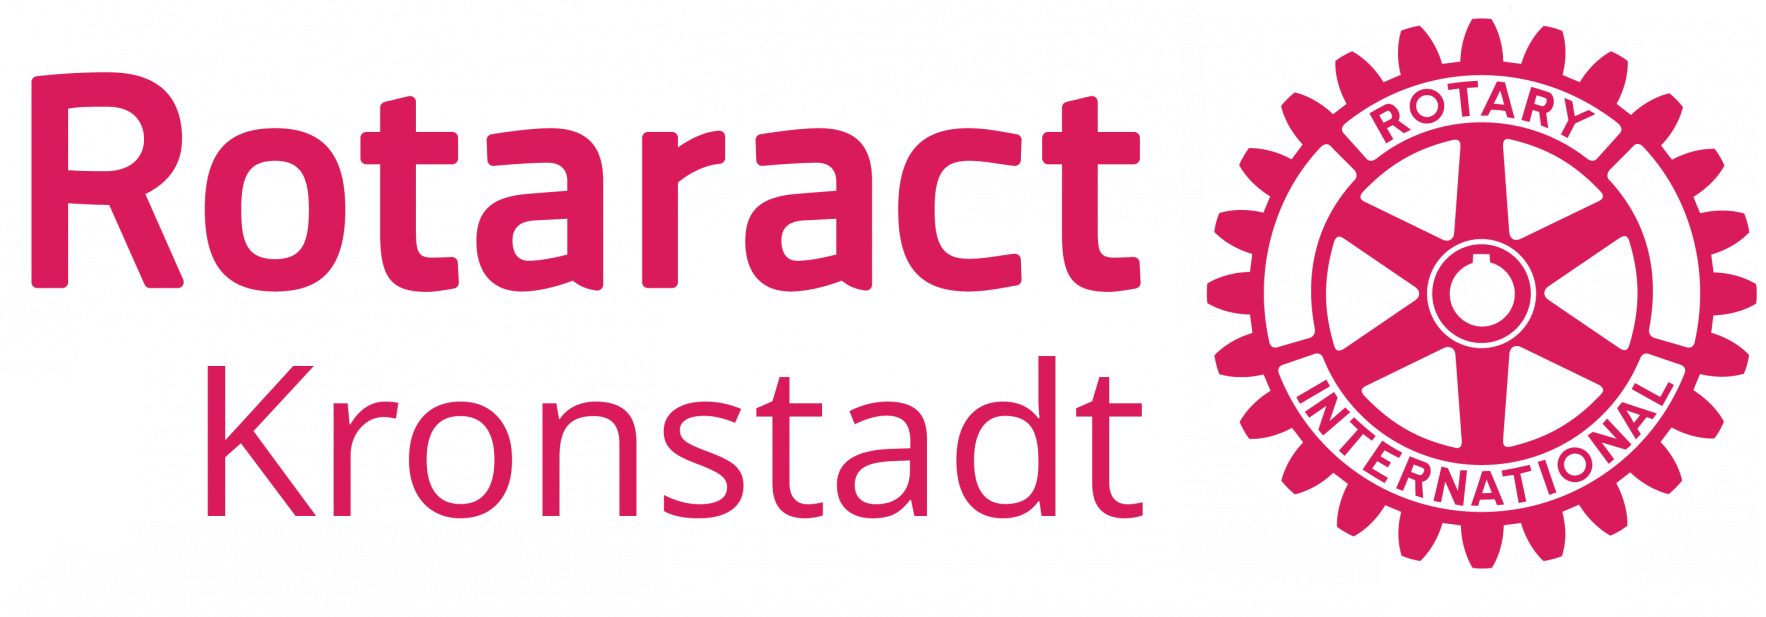 Asociatia Rotaract Kronstadt  logo